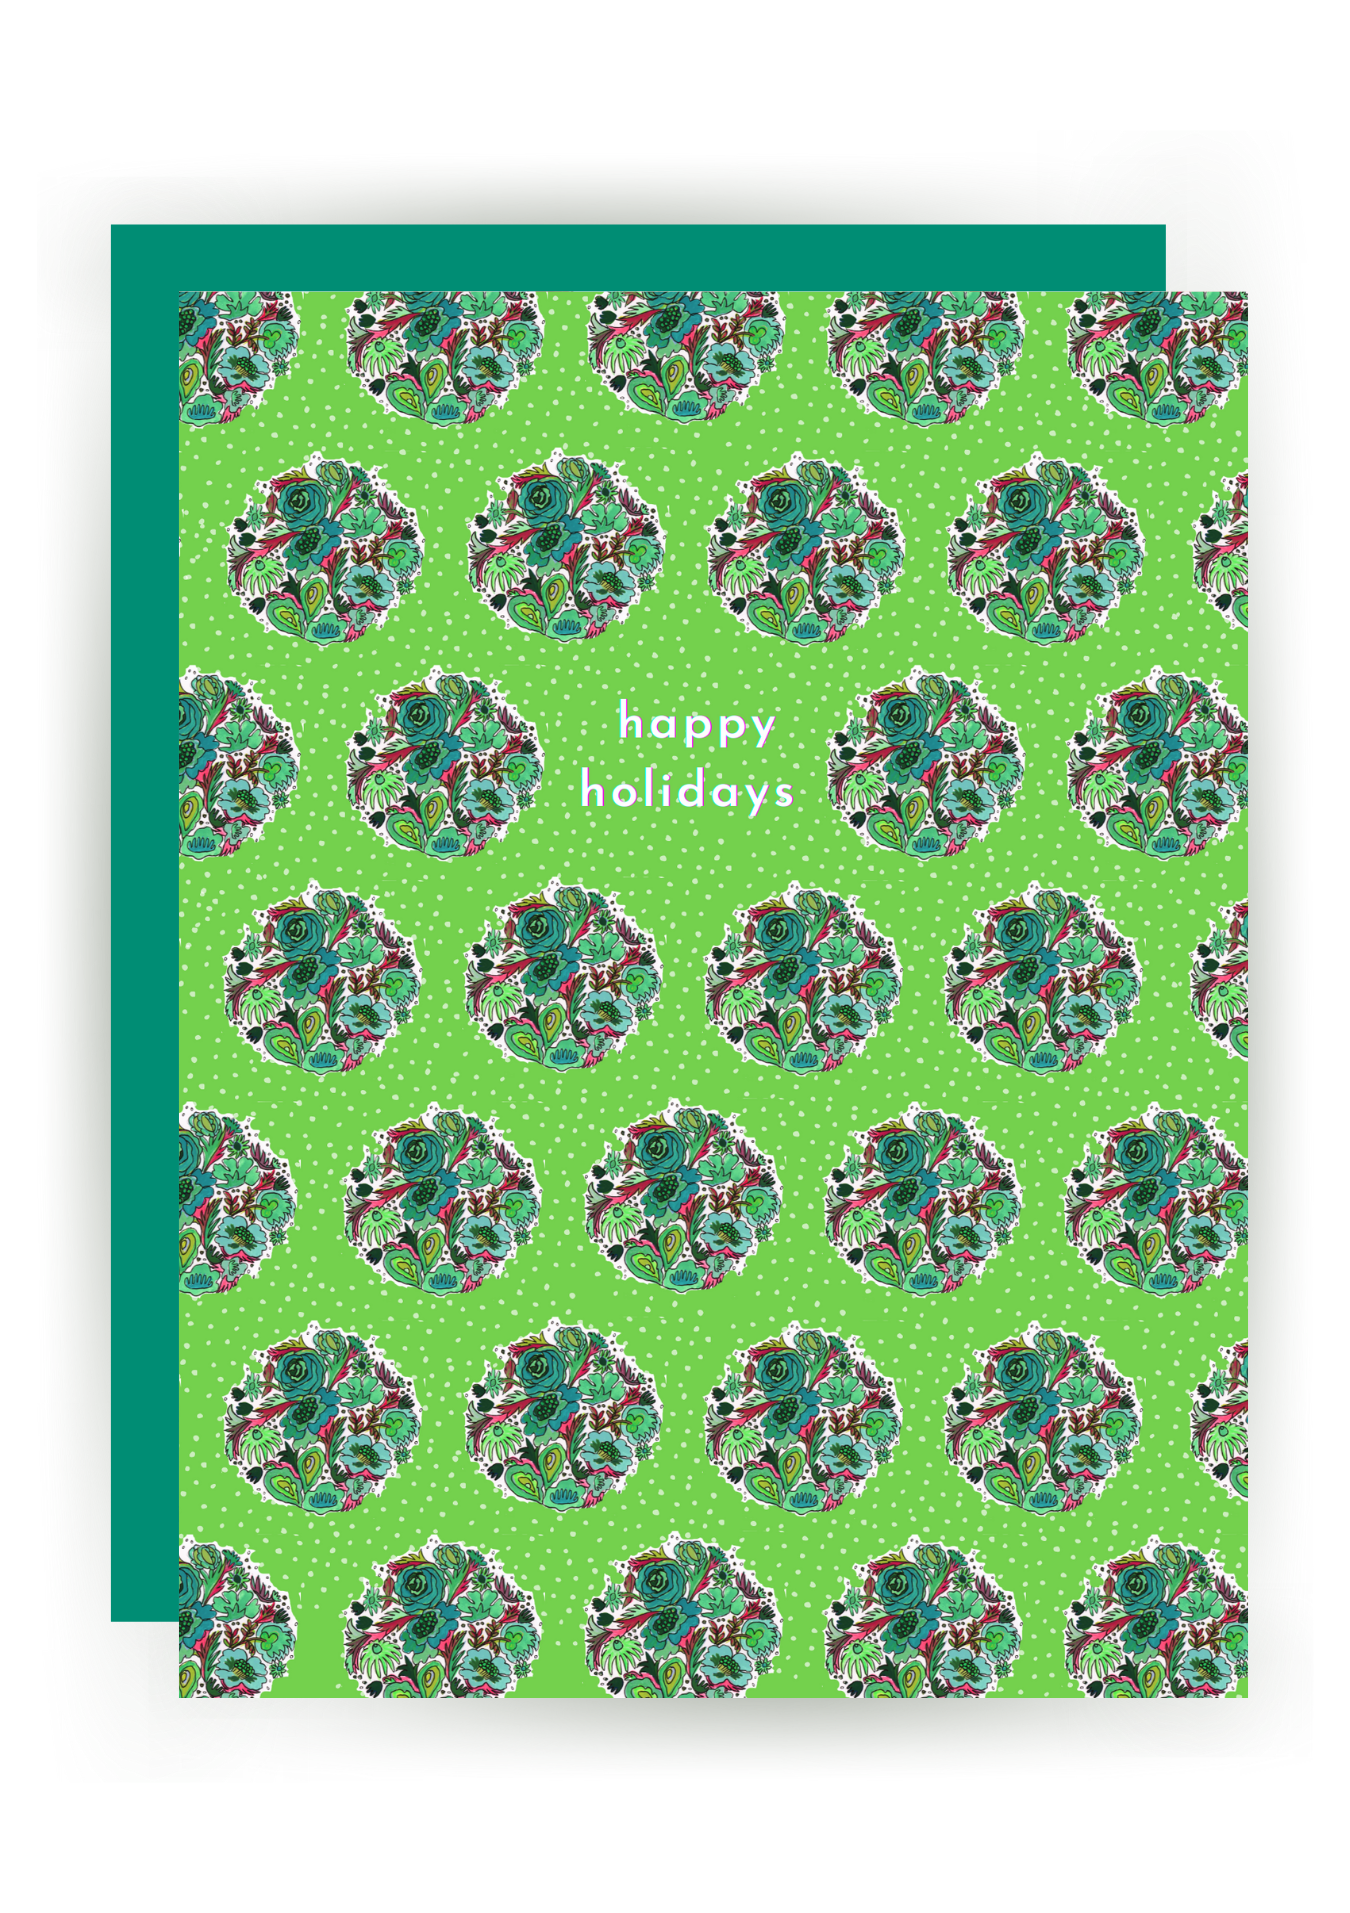 NF H 17 / Happy Holidays (mistletoe) Greeting Card